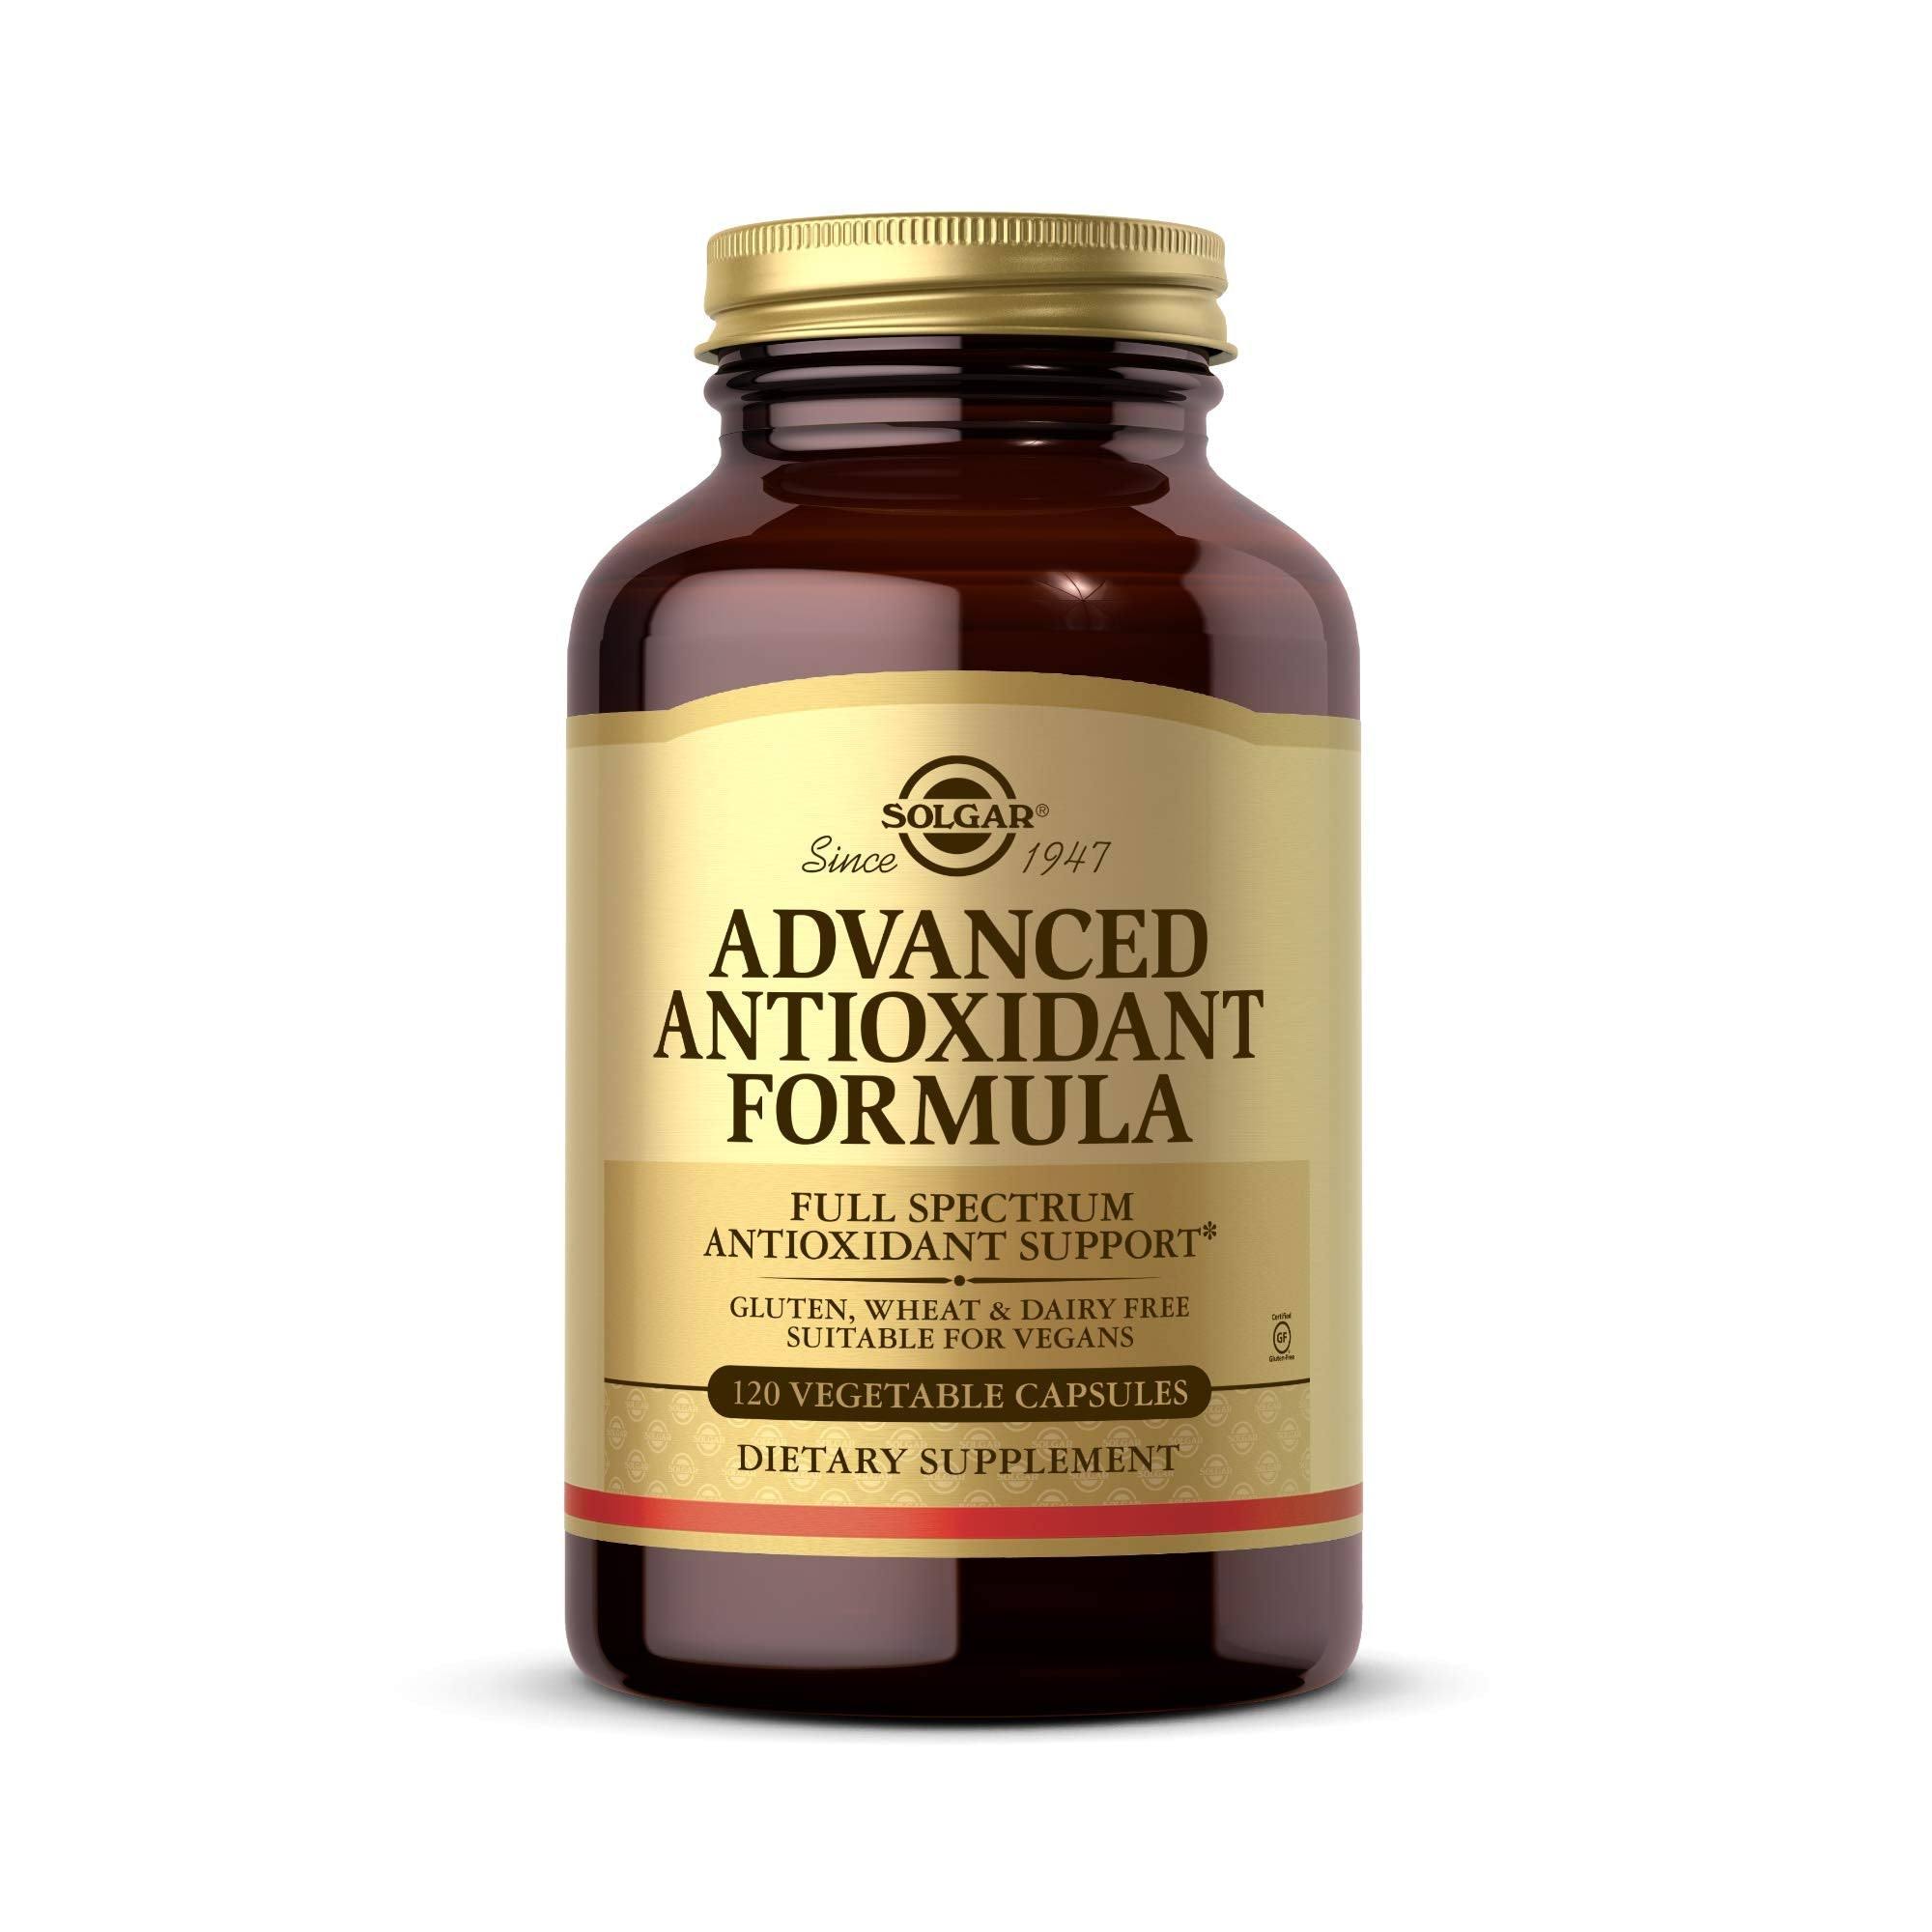 Solgar Advanced Antioxidant Formula Dietary Supplement - 120 Vegetable Capsules